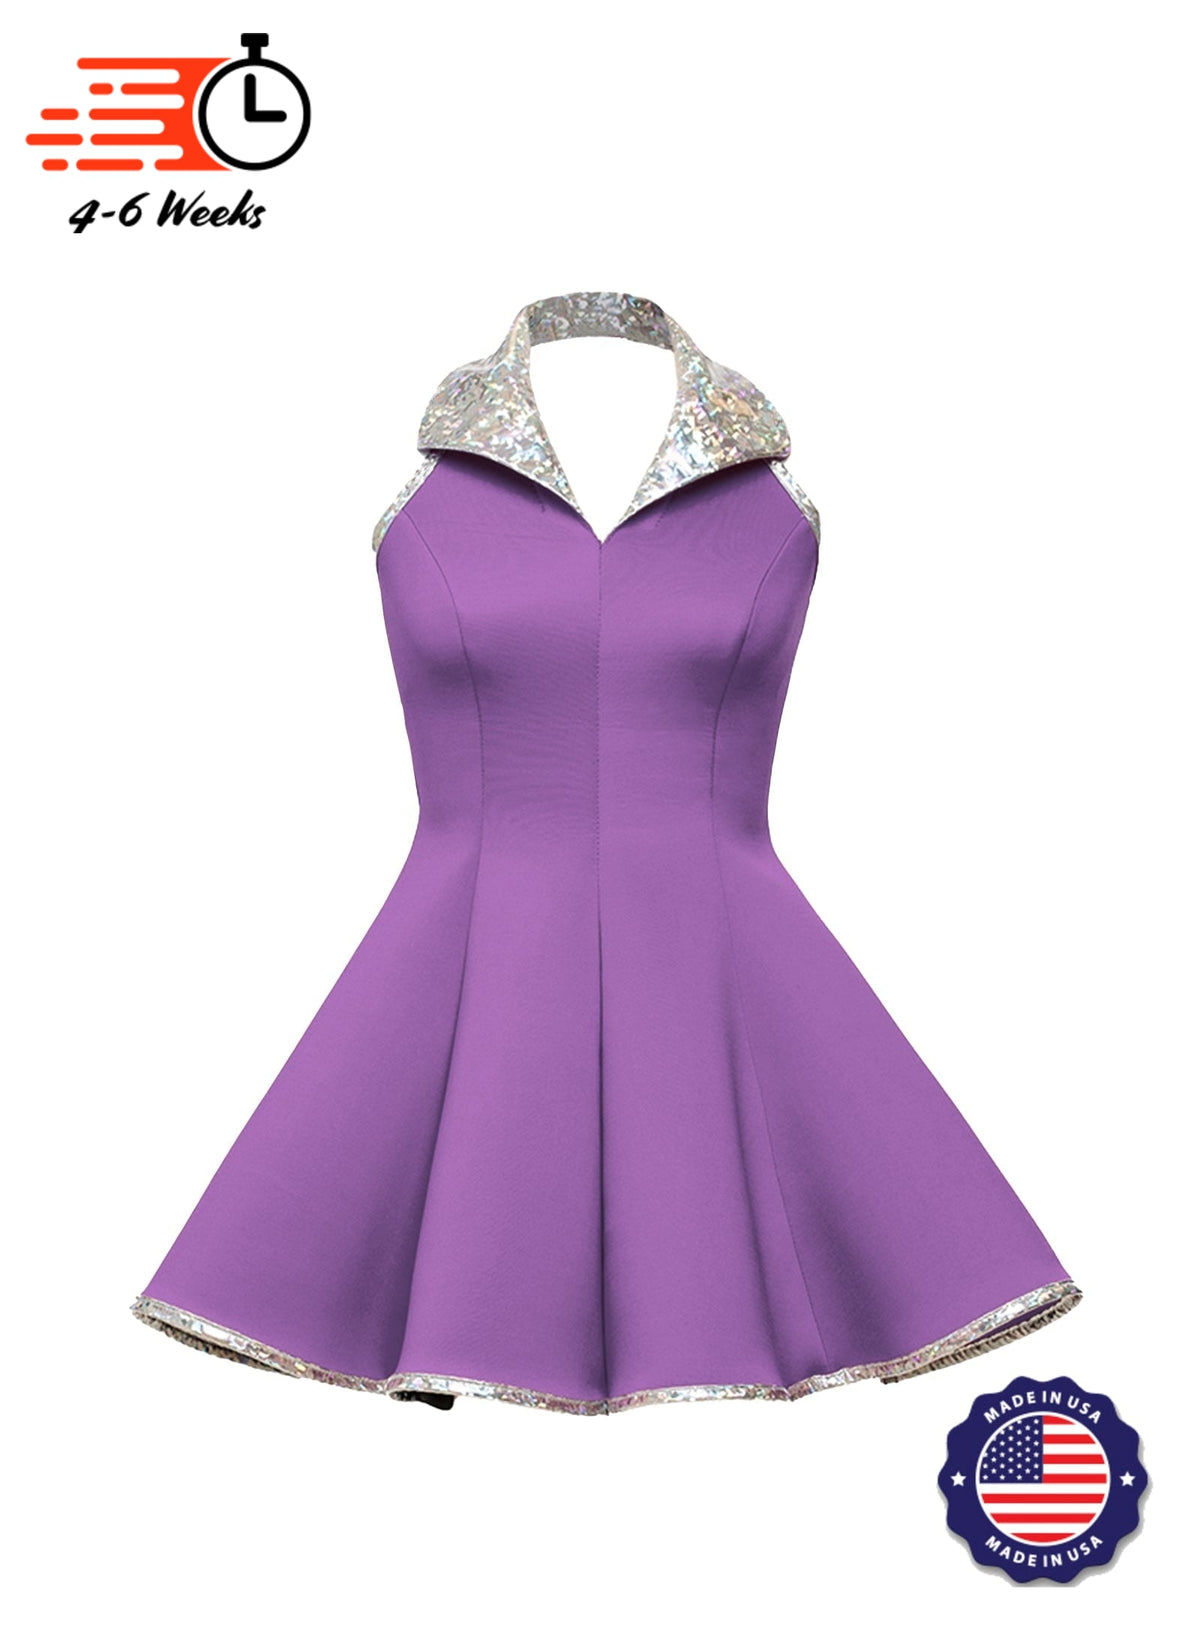 Lapel Collar Princess Panel Show Choir Dress - Pinks & Purples - Ships 4 to 6 weeks